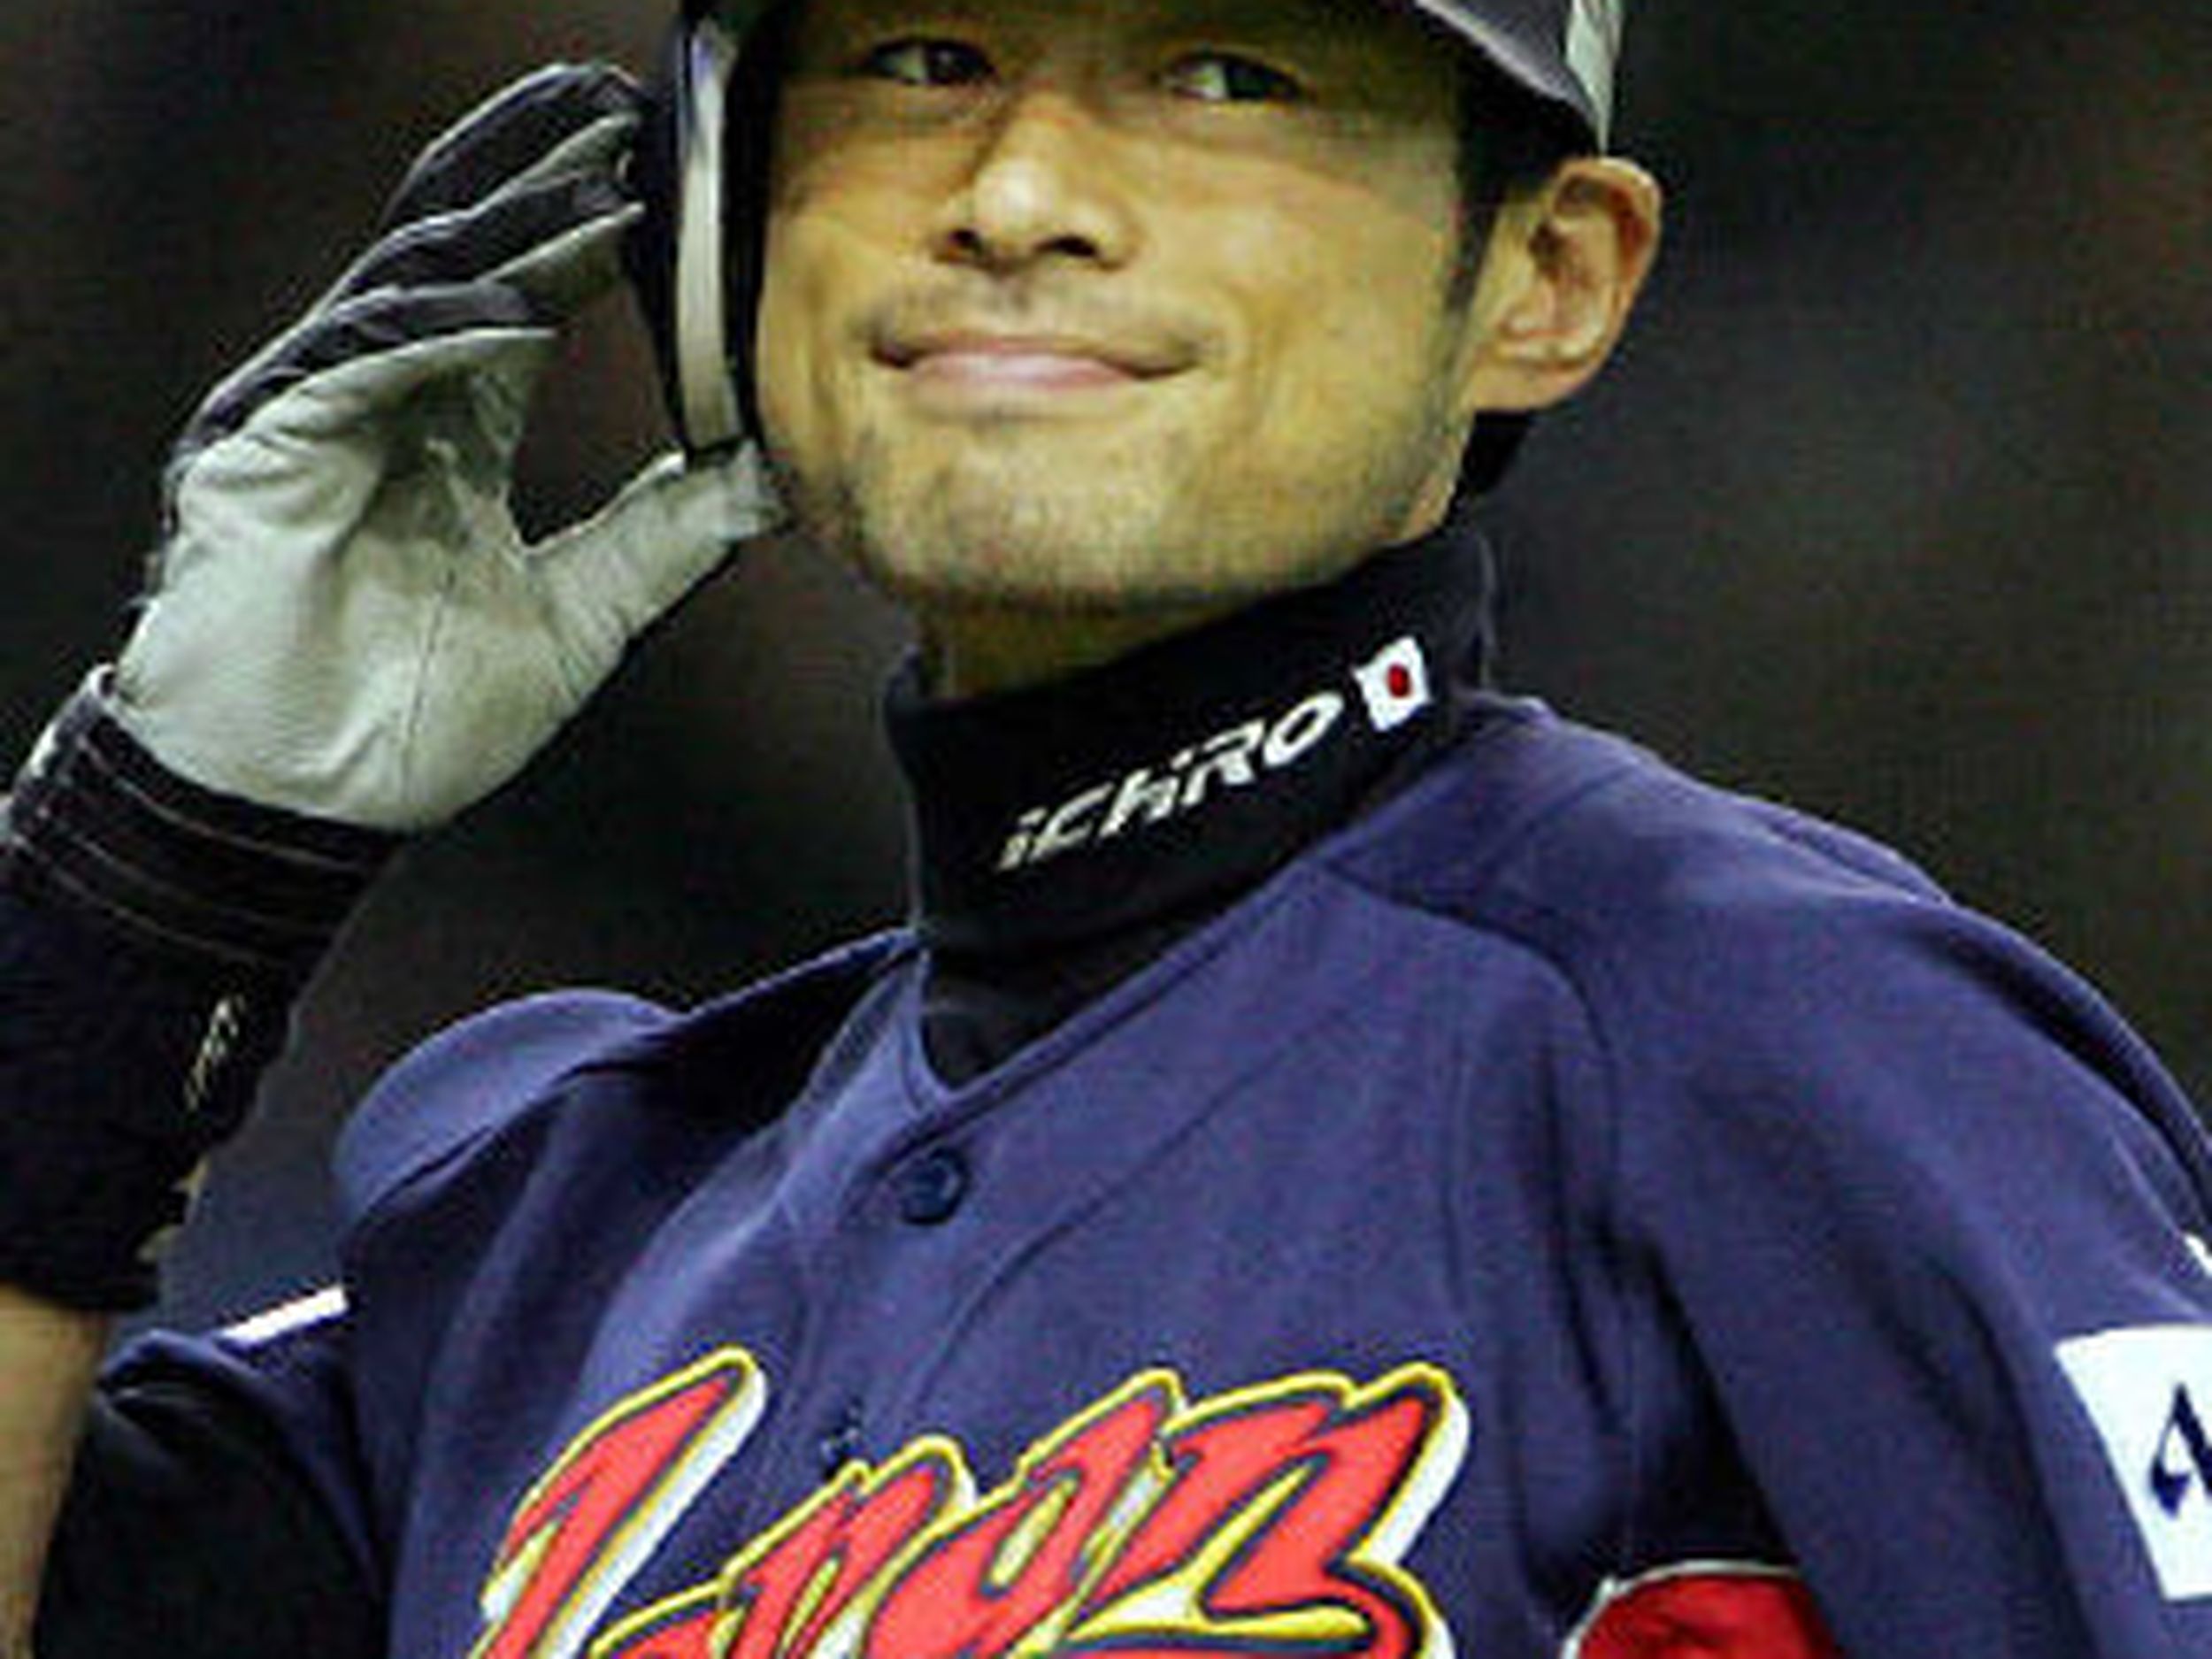 Ichiro feels better after sounding off | The Spokesman-Review